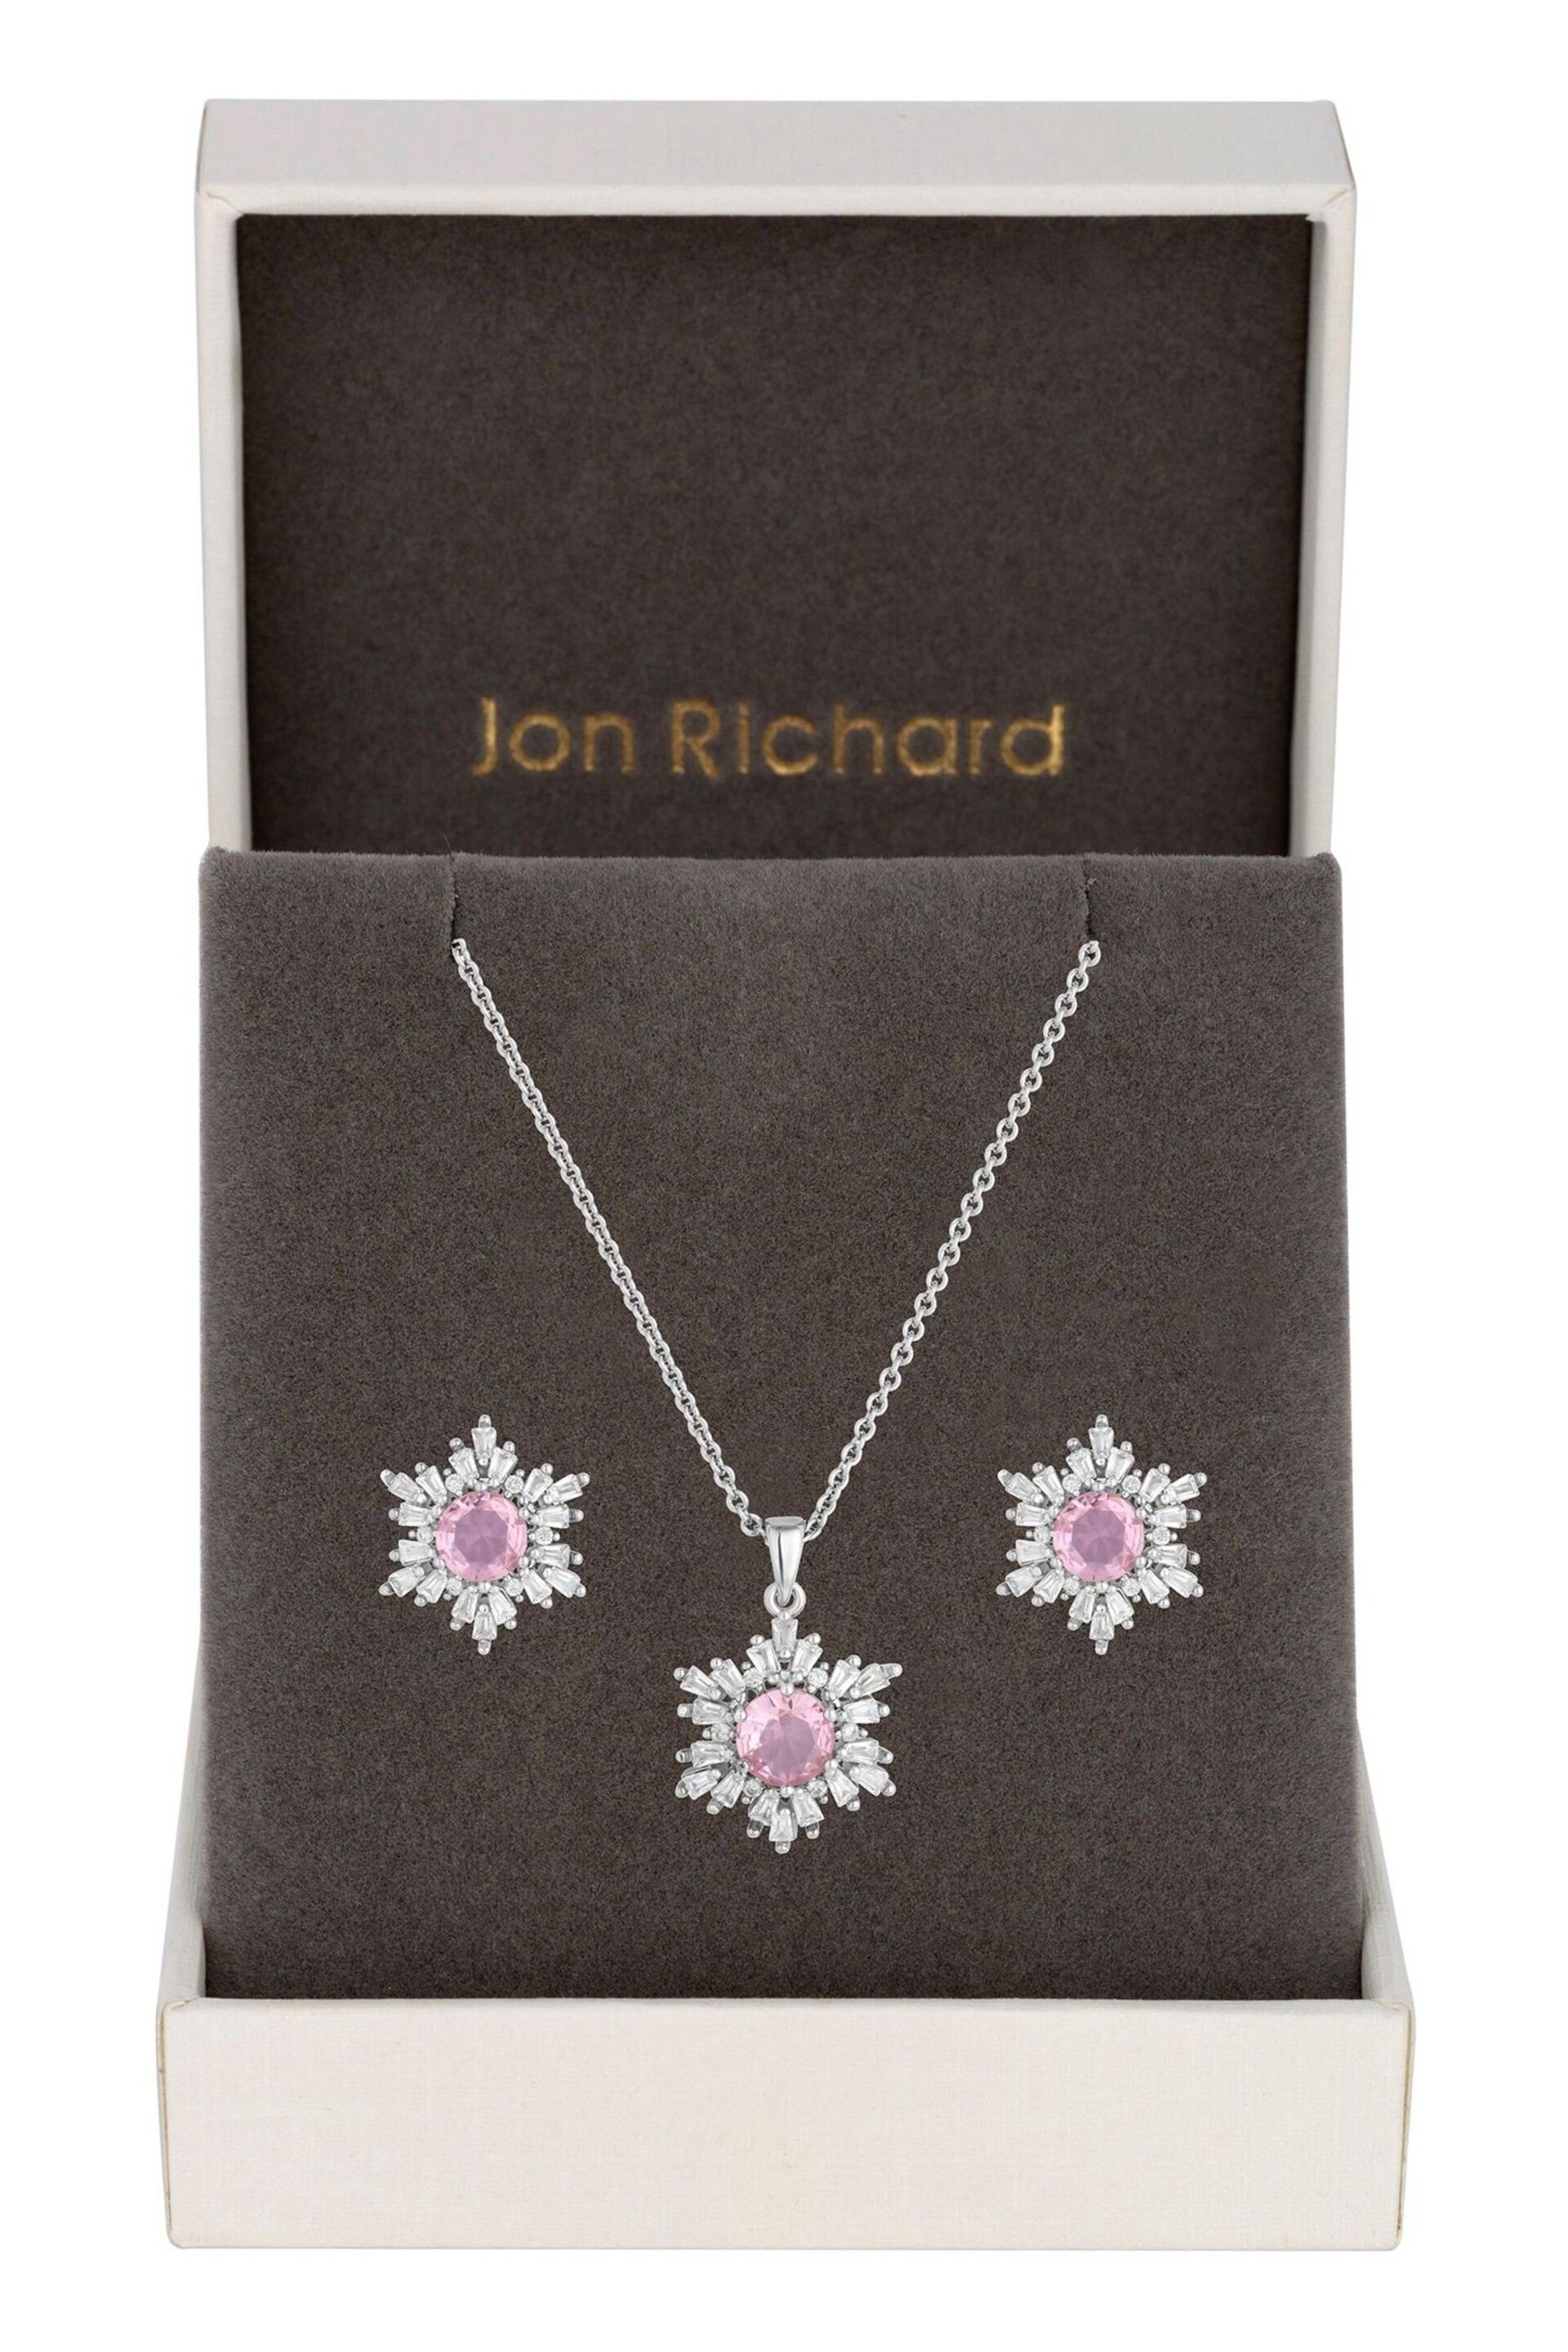 Jon Richard Silver Cubic Zirconia Set - Gift Boxed - Image 1 of 4